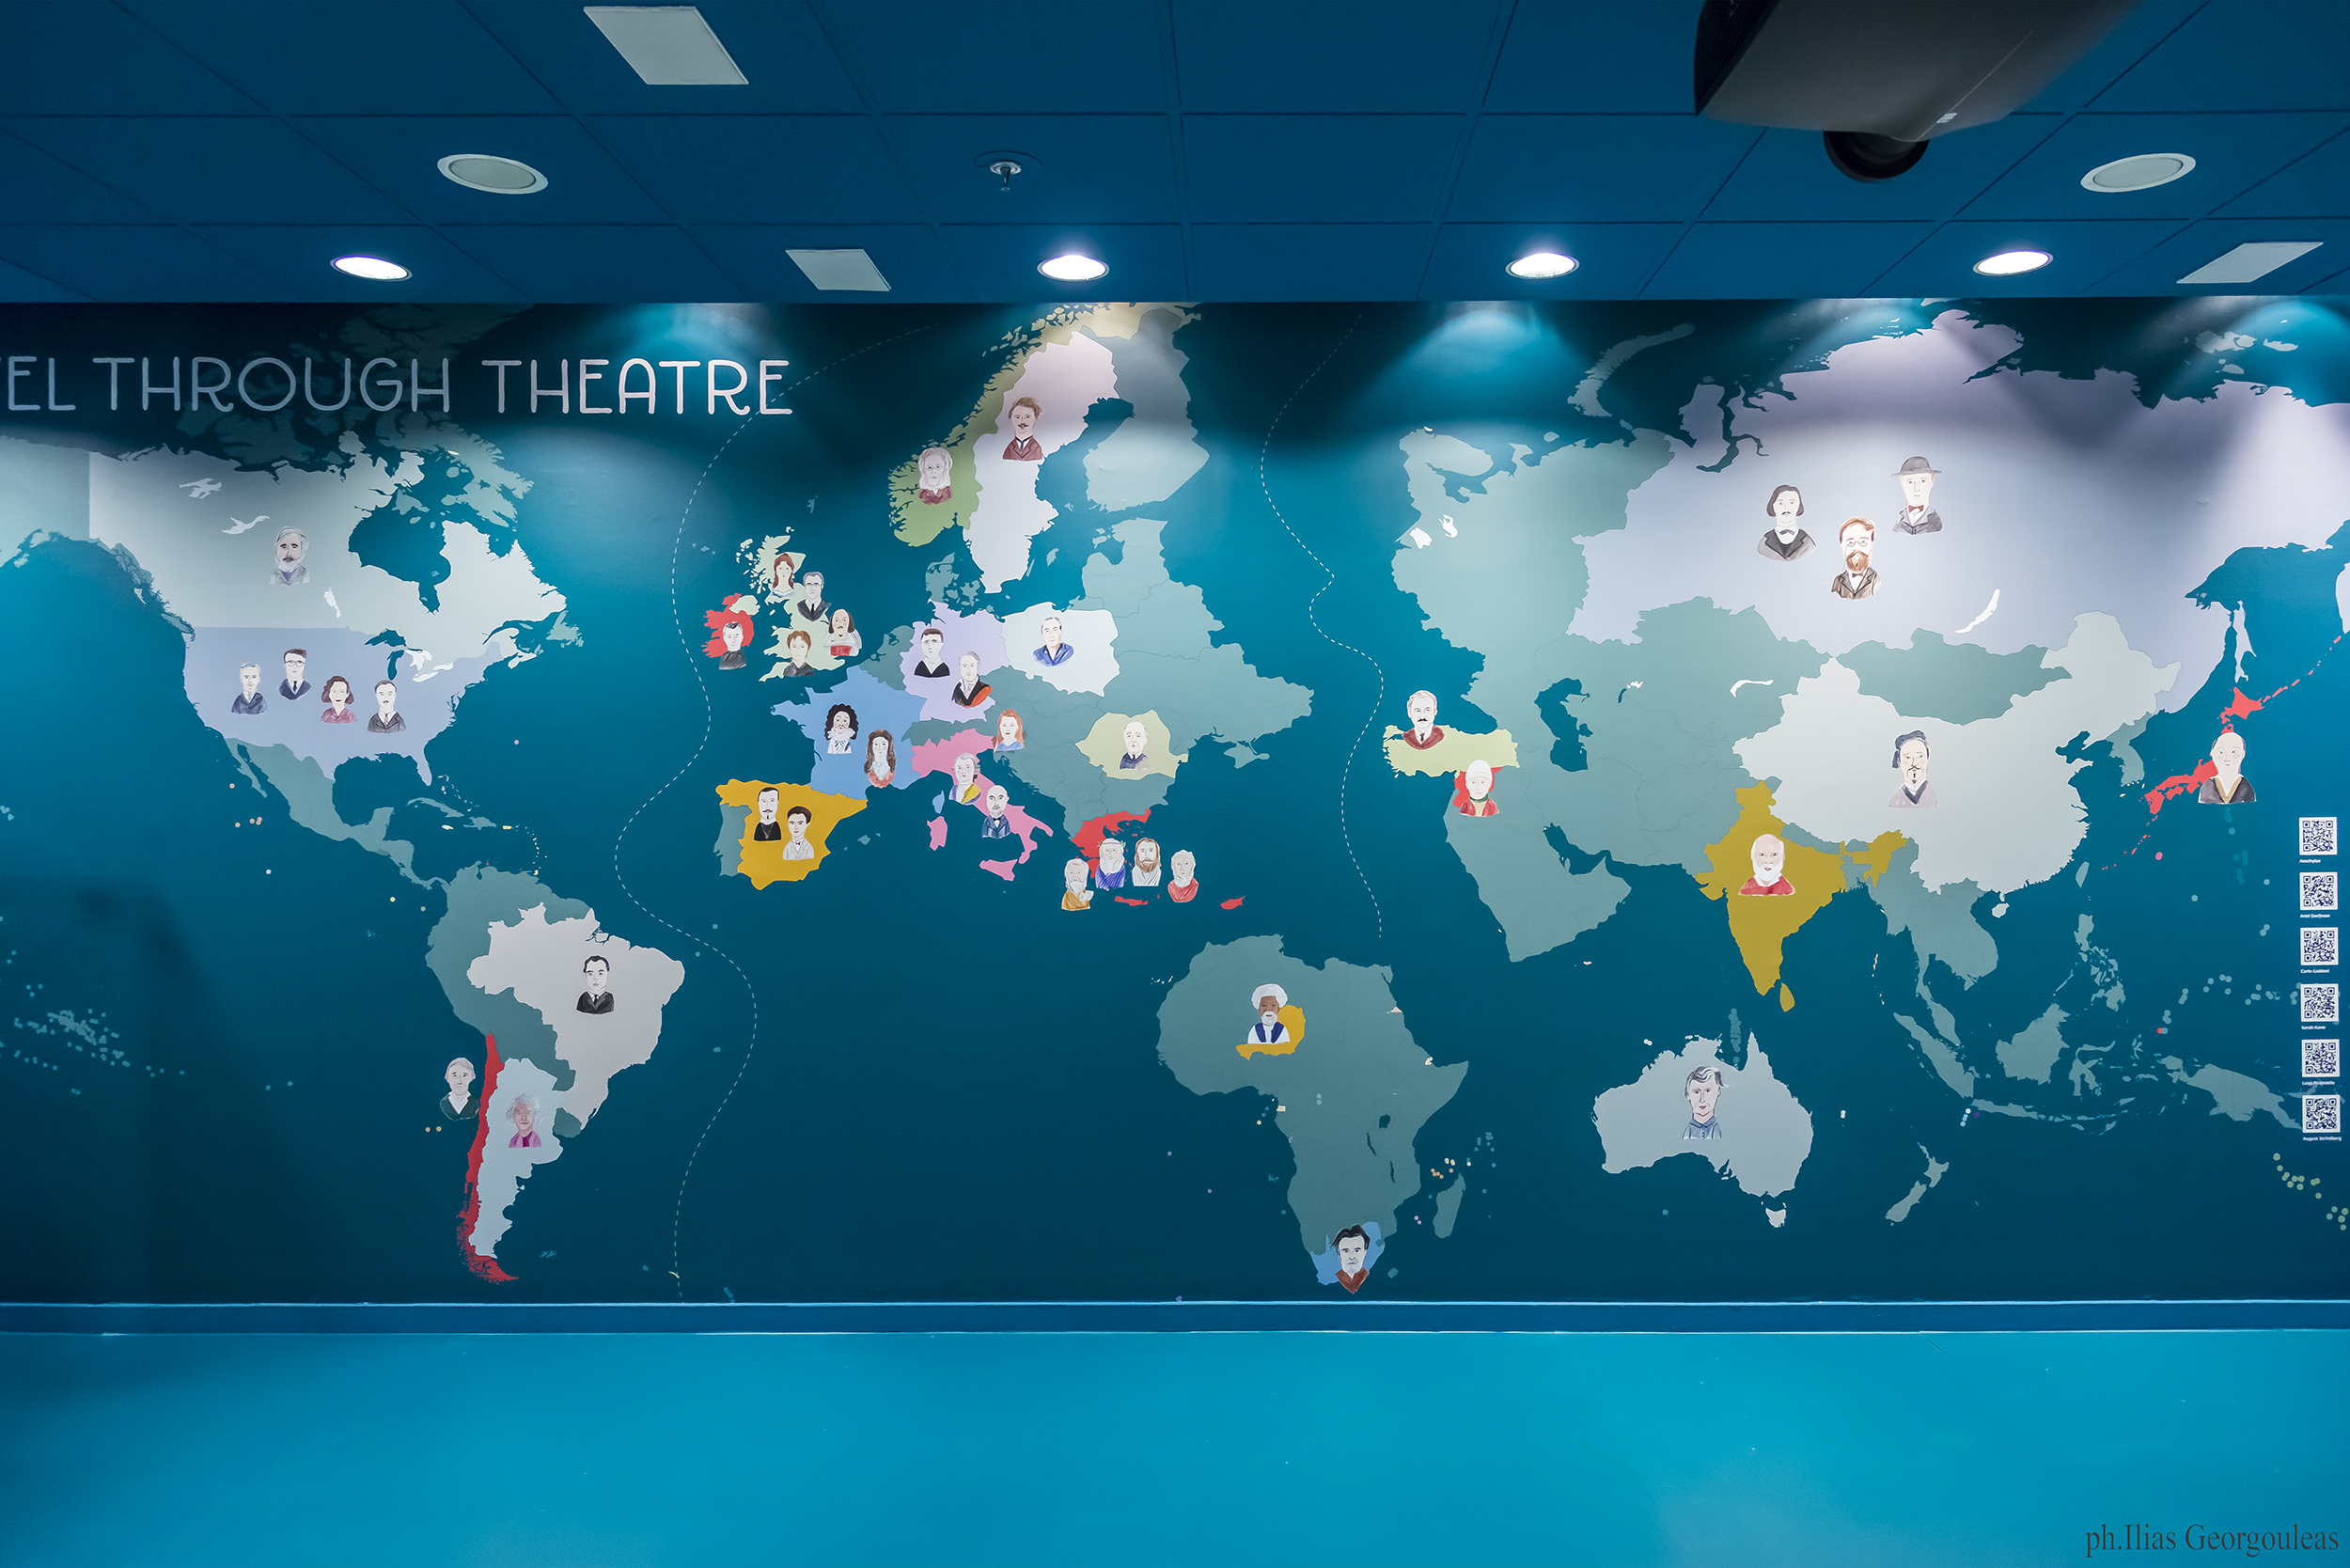 Travel Through Theatre: Το θέατρο «ενώνει» τον κόσμο στη νέα έκθεση του Εθνικού και του Διεθνούς Αερολιμένα Αθηνών